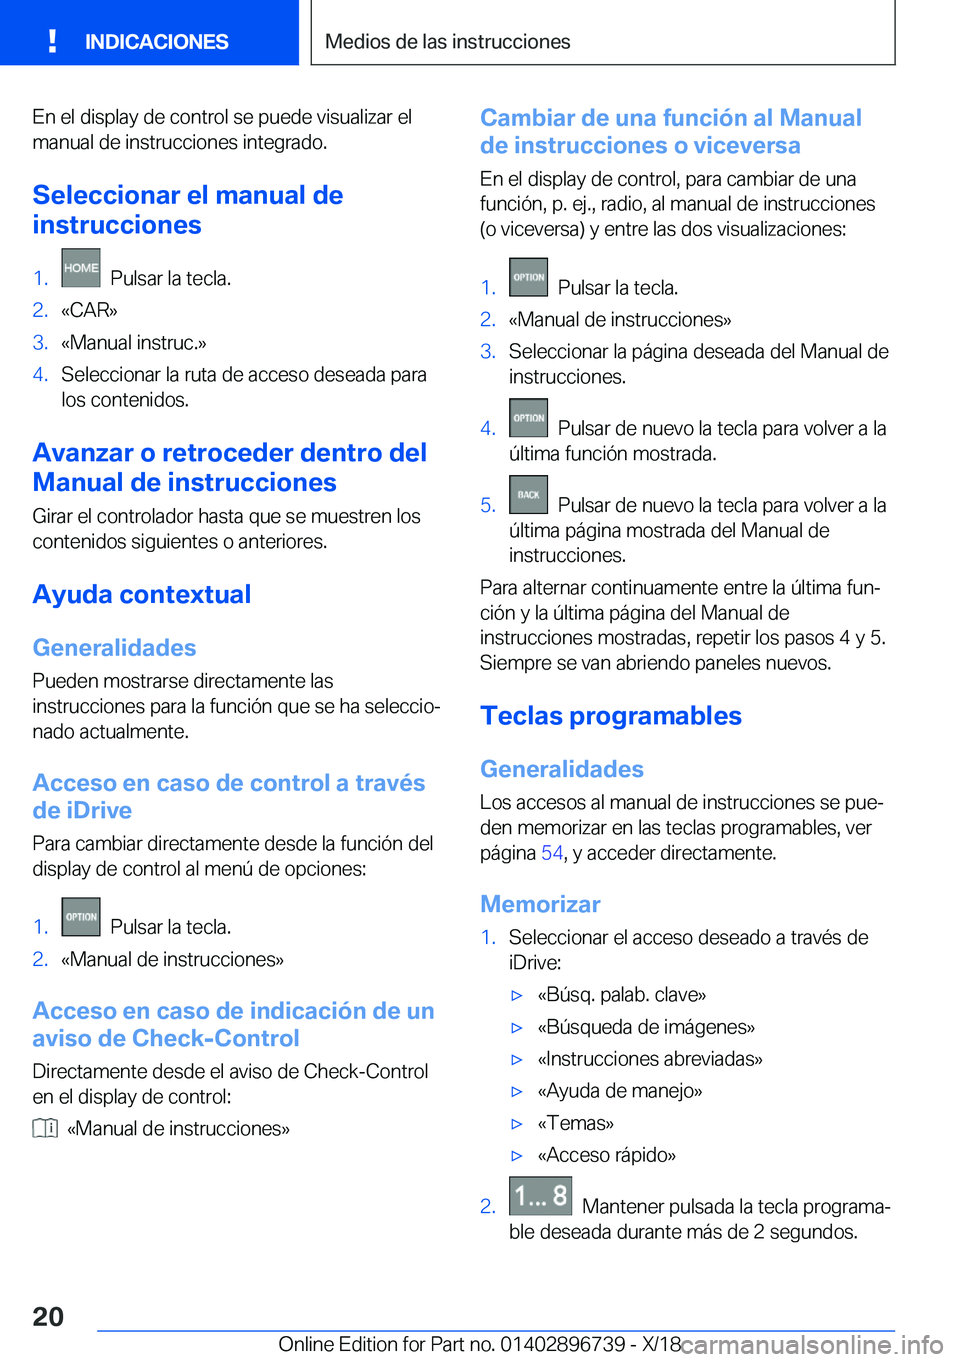 BMW X5 2019  Manuales de Empleo (in Spanish) �E�n��e�l��d�i�s�p�l�a�y��d�e��c�o�n�t�r�o�l��s�e��p�u�e�d�e��v�i�s�u�a�l�i�z�a�r��e�l�m�a�n�u�a�l��d�e��i�n�s�t�r�u�c�c�i�o�n�e�s��i�n�t�e�g�r�a�d�o�.
�S�e�l�e�c�c�i�o�n�a�r��e�l��m�a�n�